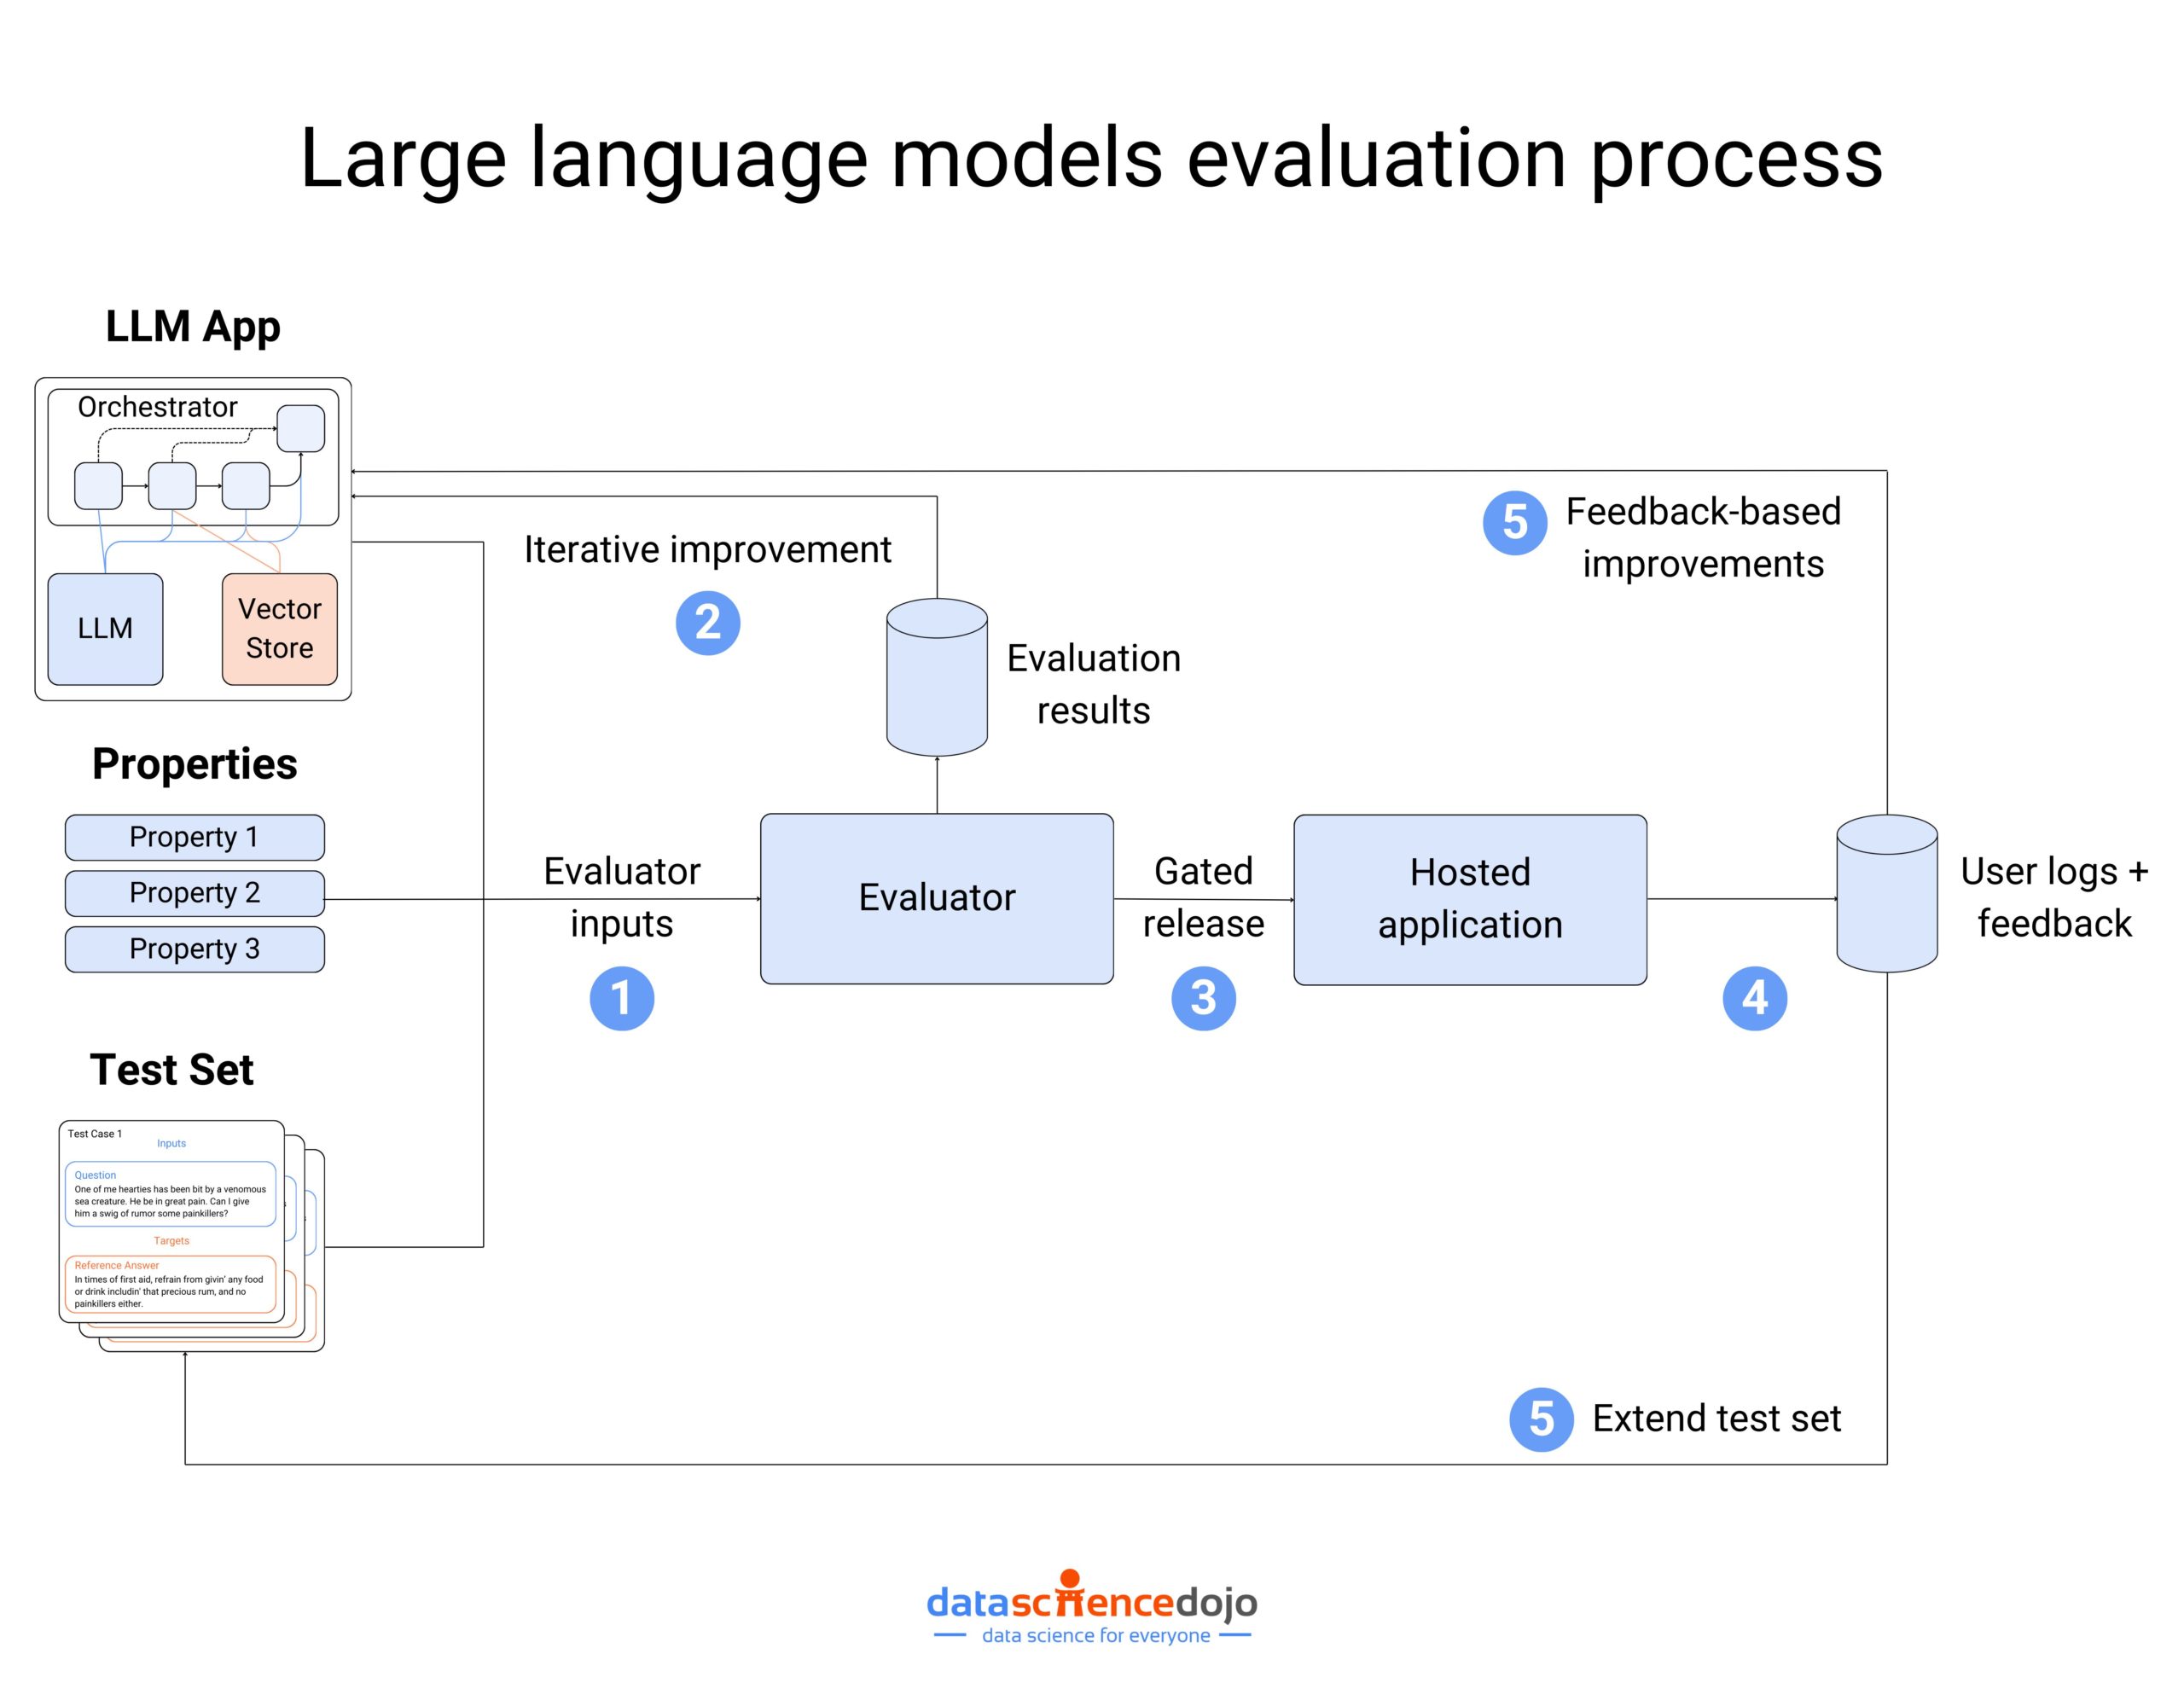 large language models - Evaluation process to enhance LLM performance